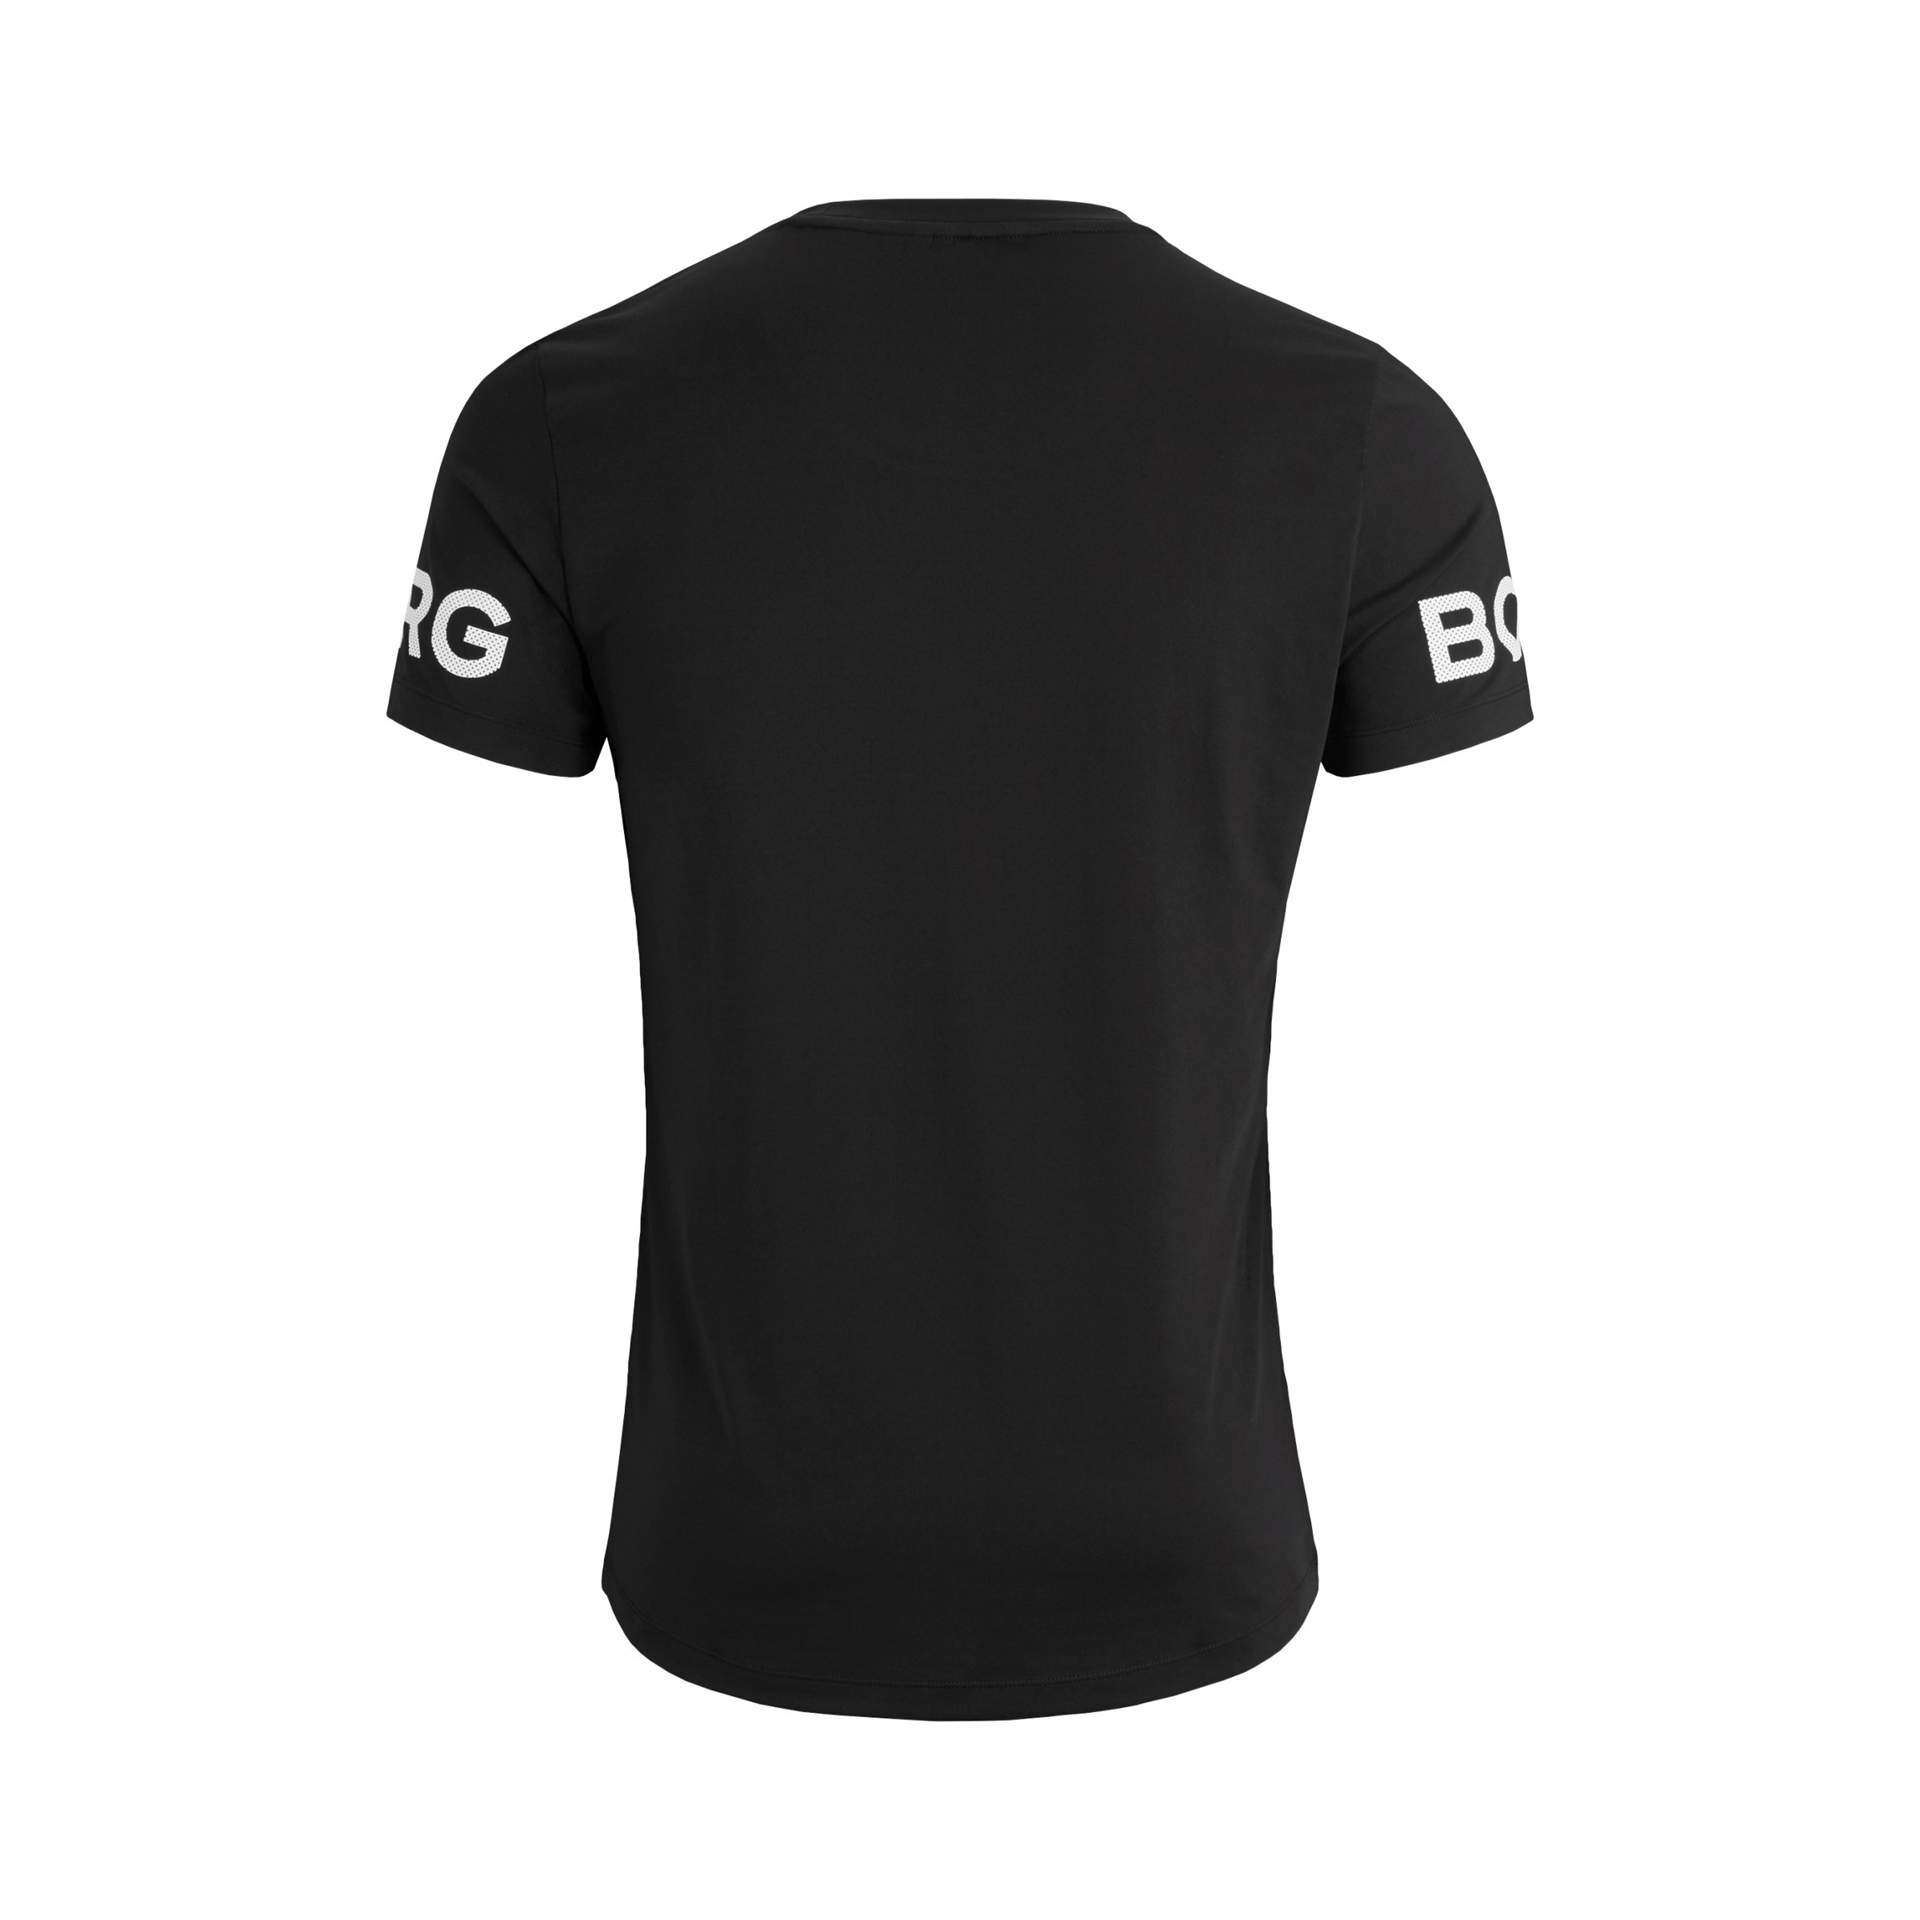 Borg Running Seamless T-Shirt - Black Beauty